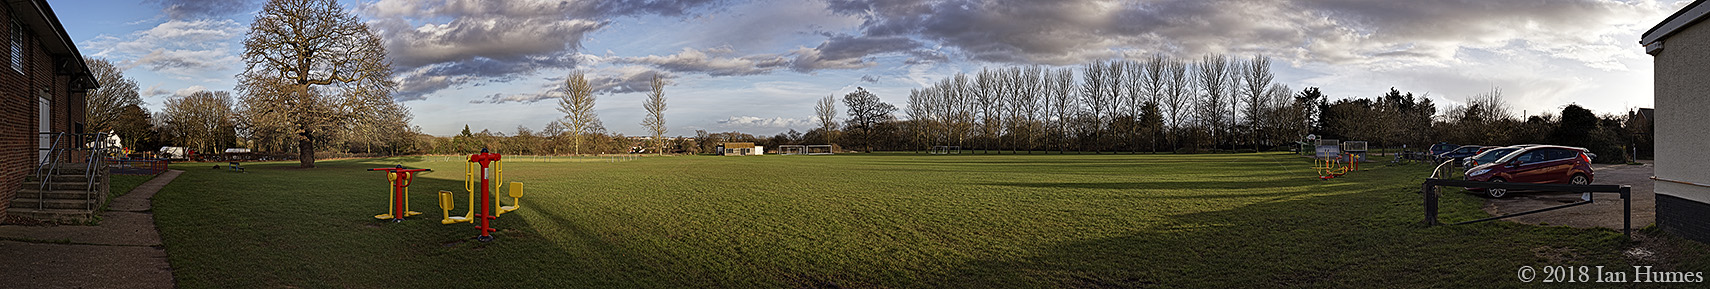 Village Football Pitch - Rayne